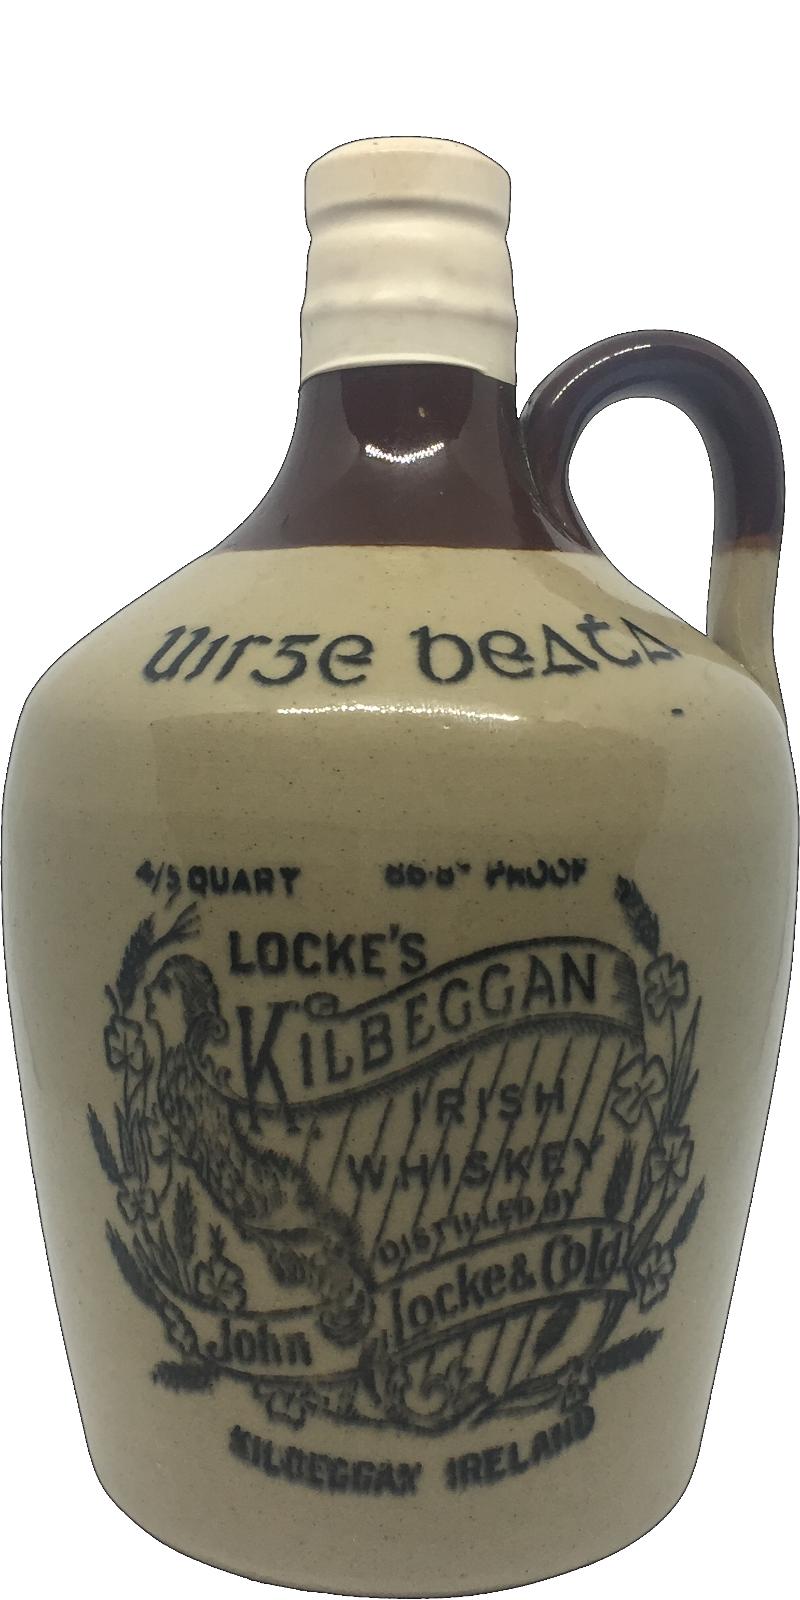 Locke\'s Kilbeggan Irish Whiskey - Value and price information - Whiskystats